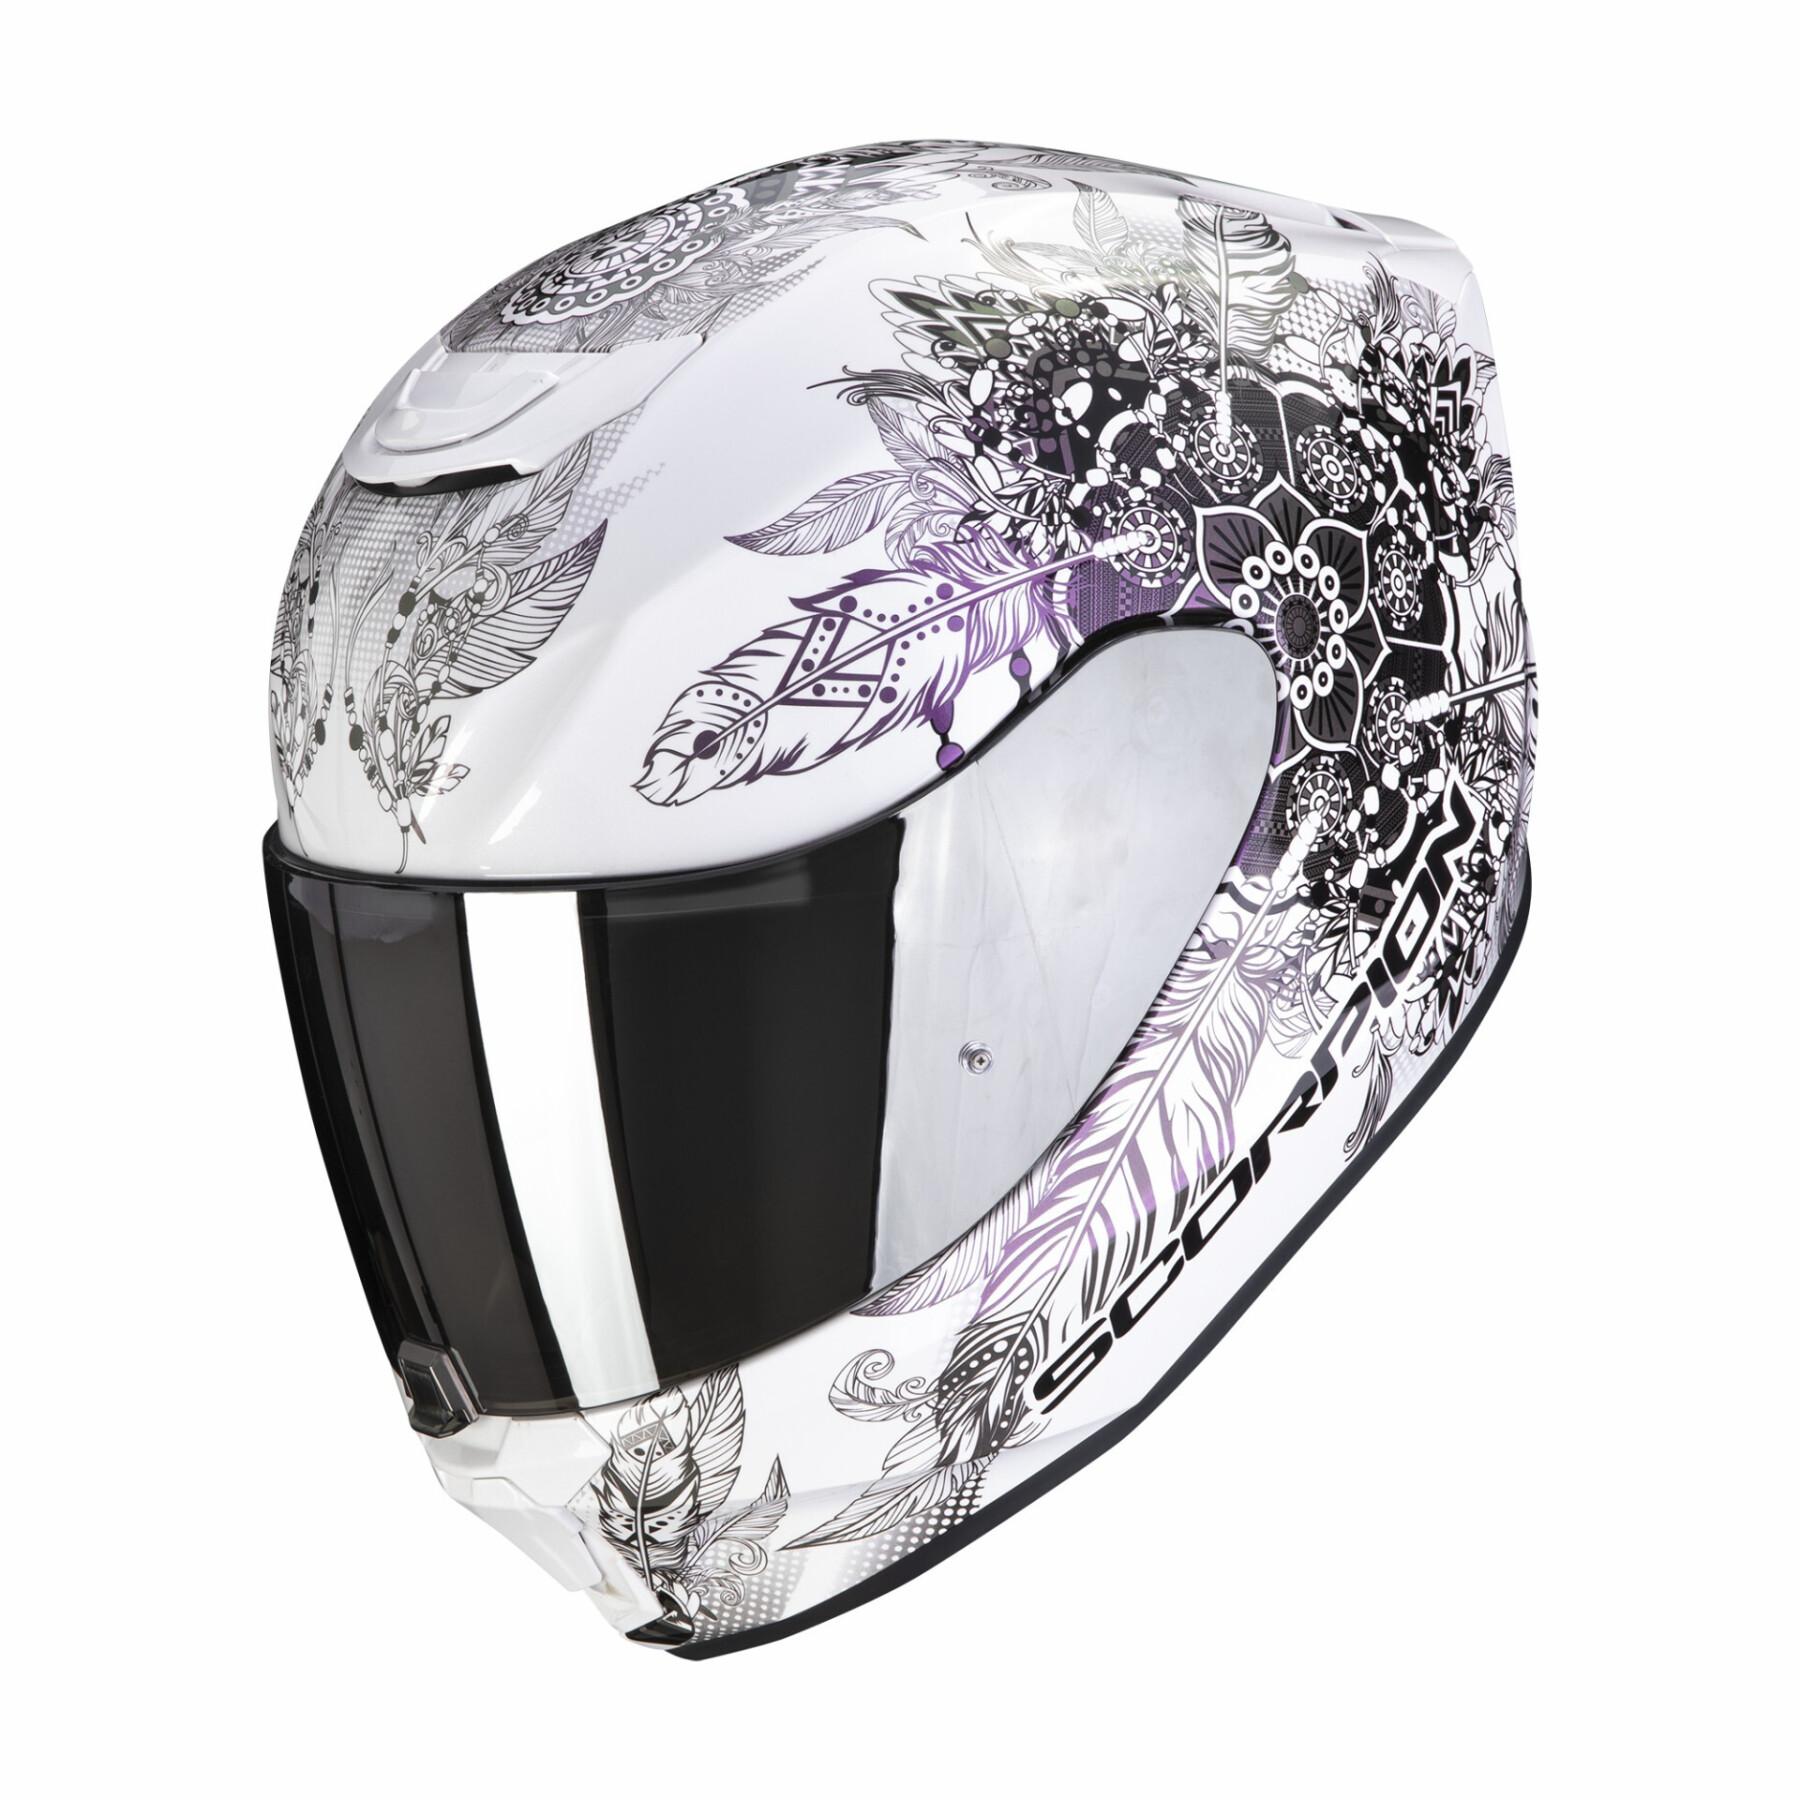 Full face motorcycle helmet Scorpion Exo-391 Dream ECE 22-06